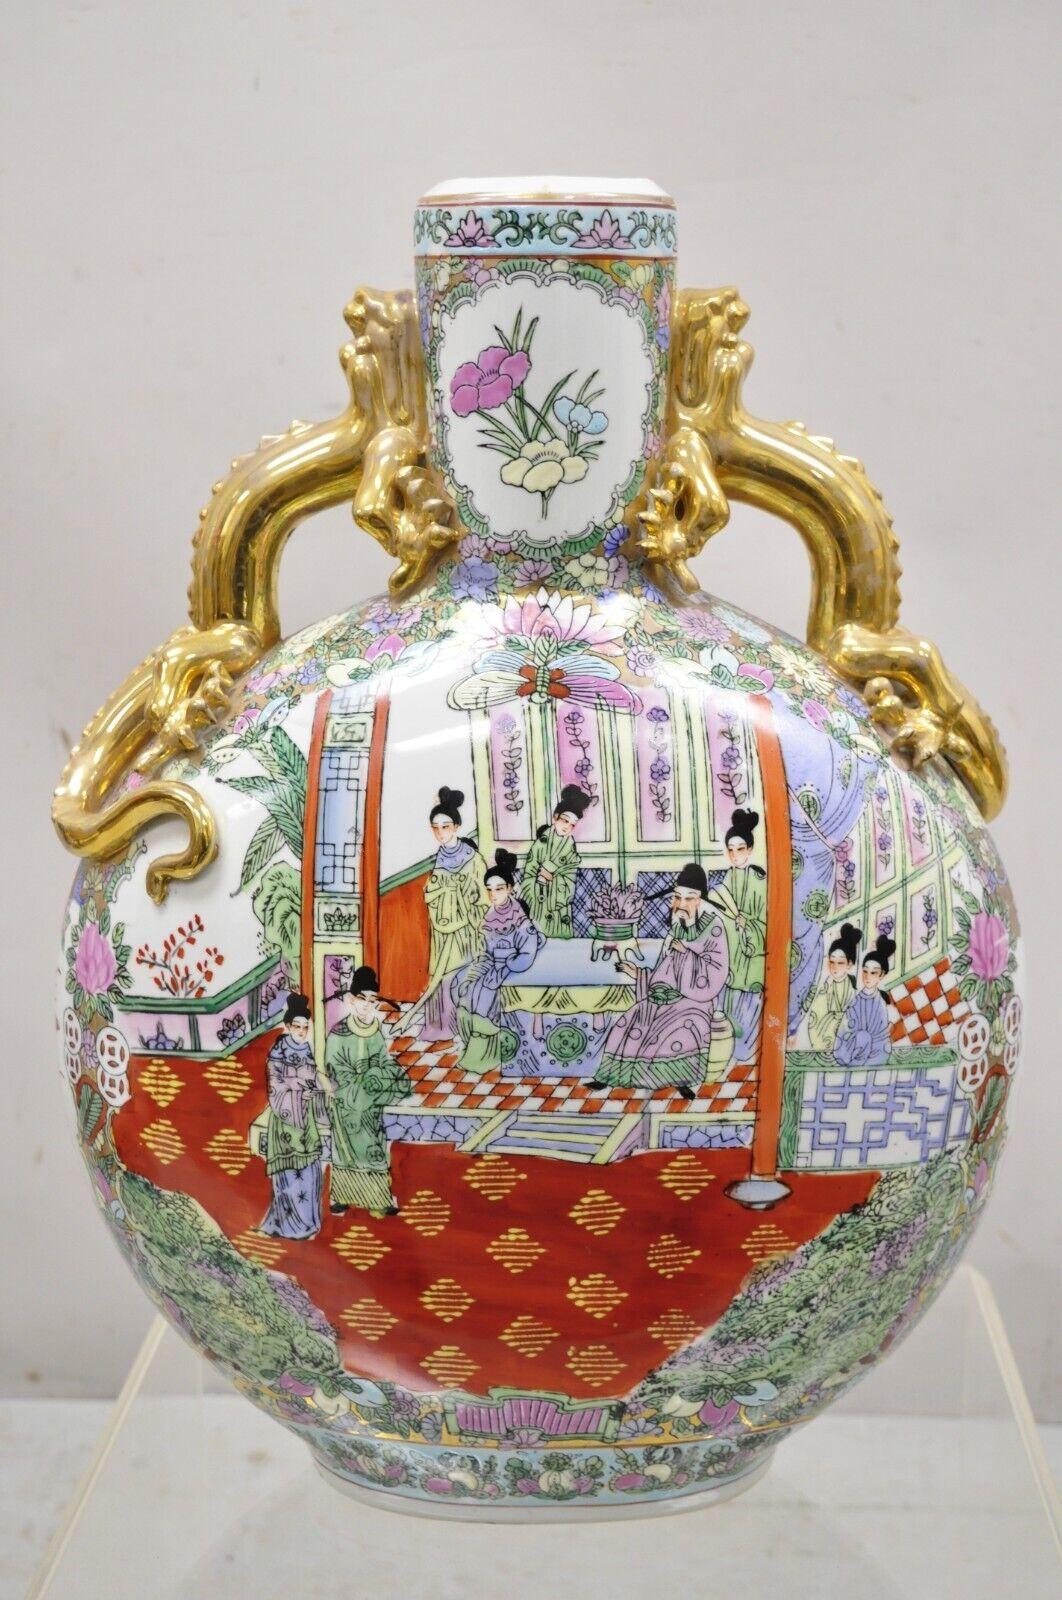 Vintage Chinese Famille rose porcelain figural orange moon flask vase with dragons. Item features twin dragon handles, gold gilt details, figural 